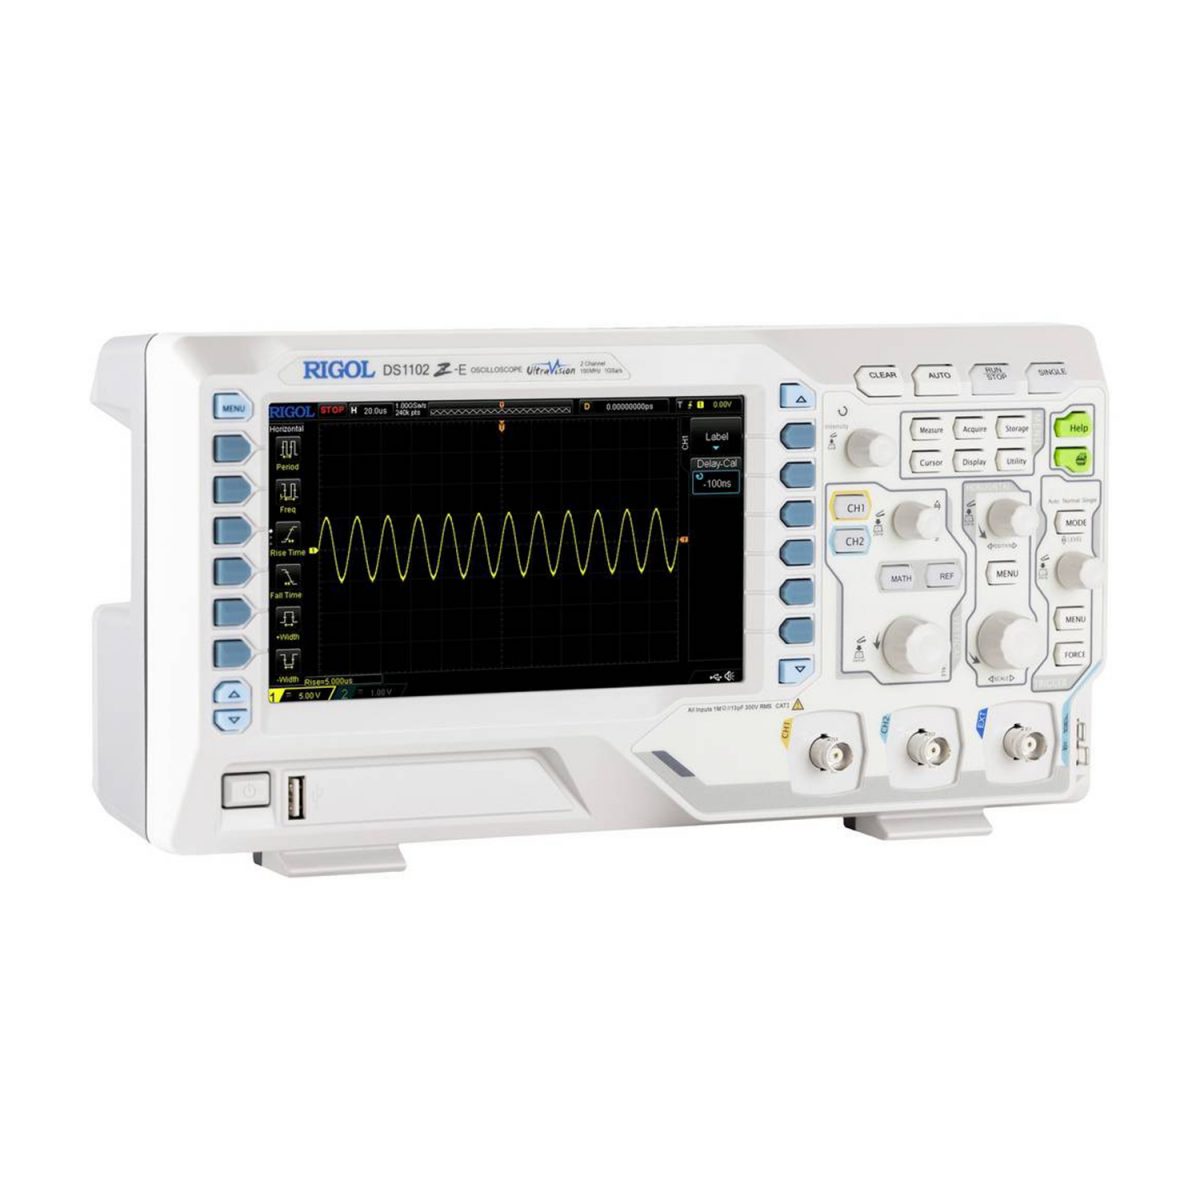 Rigol DS1102Z-E 100MHz Digital Oscilloscope